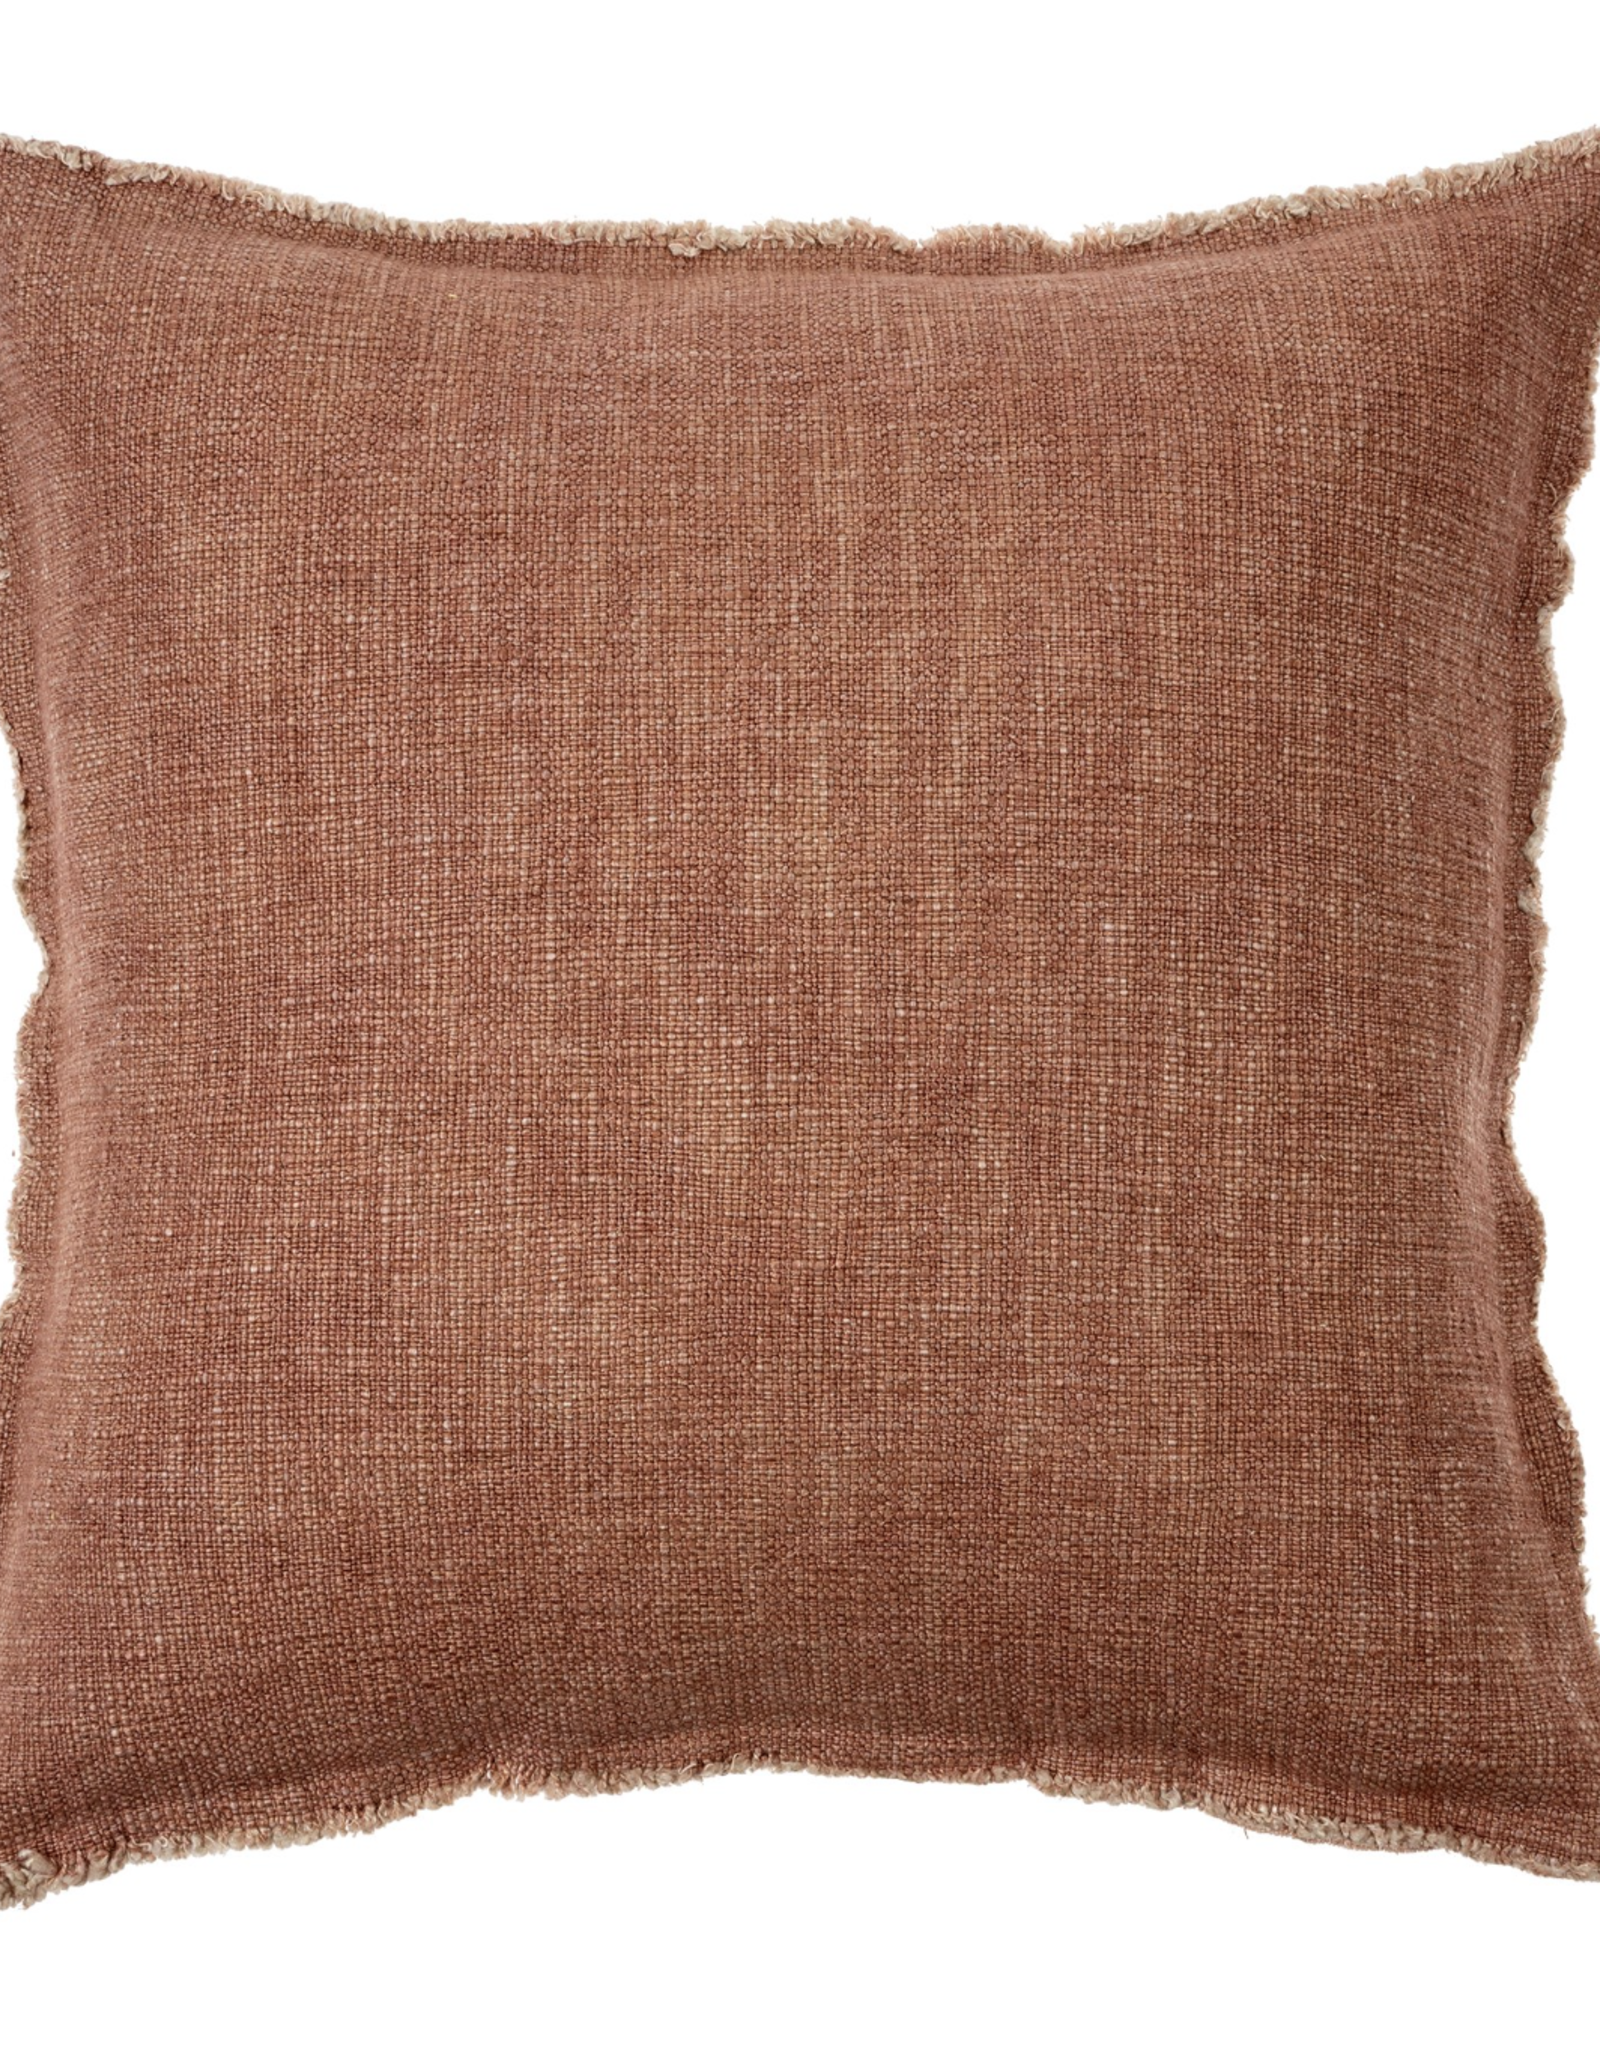 Selena Linen Pillow, Brick - 20x20